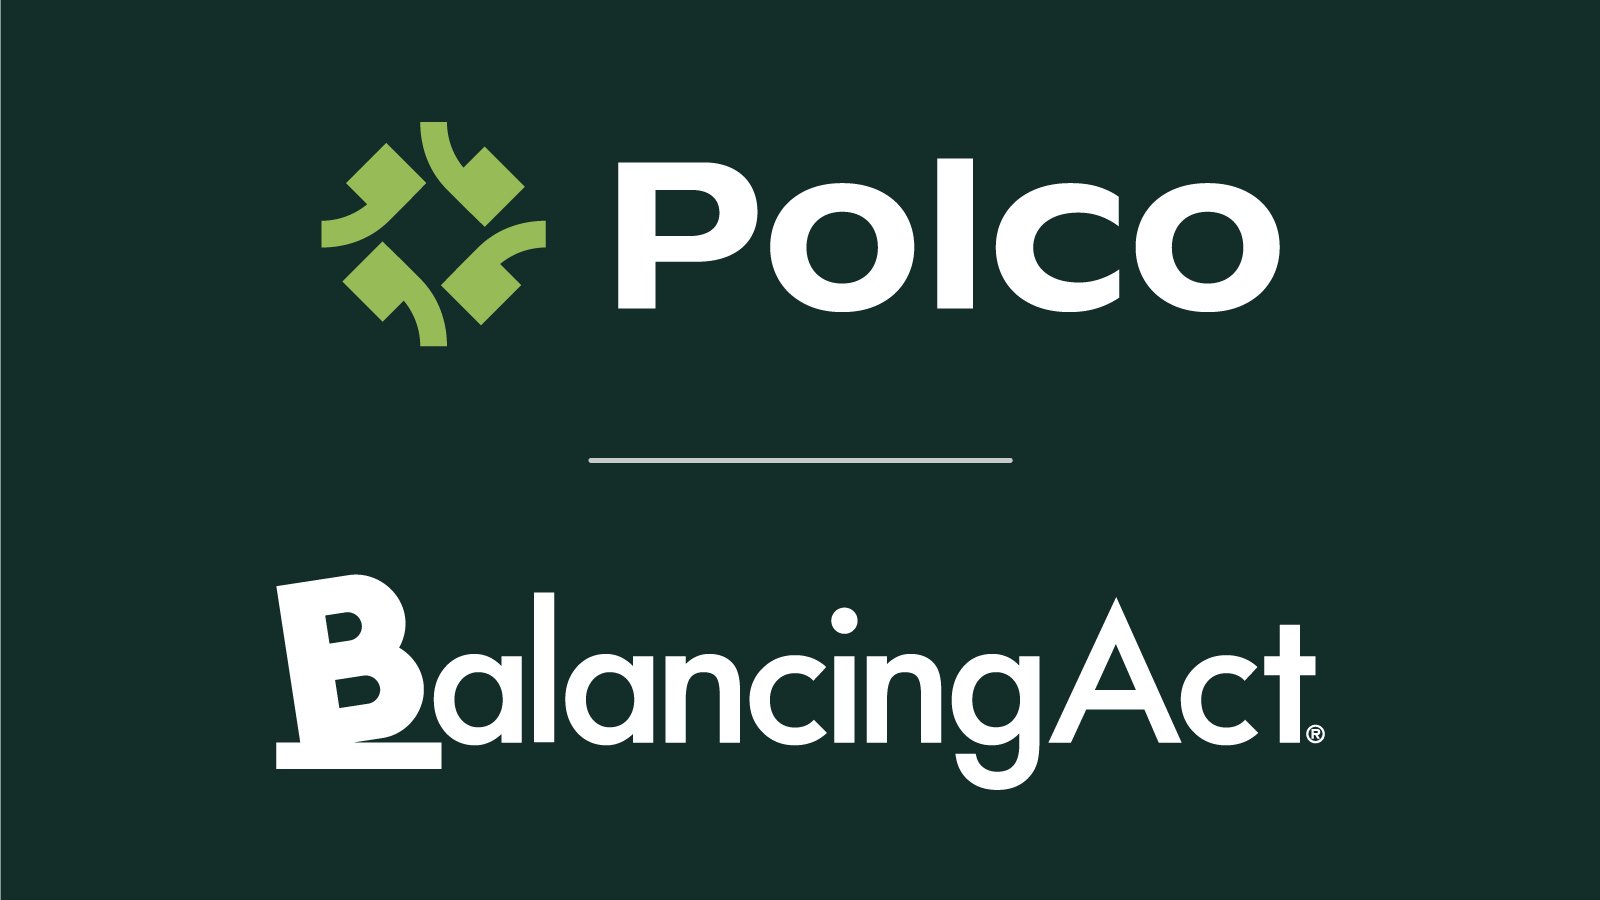 polco and balancing act merge